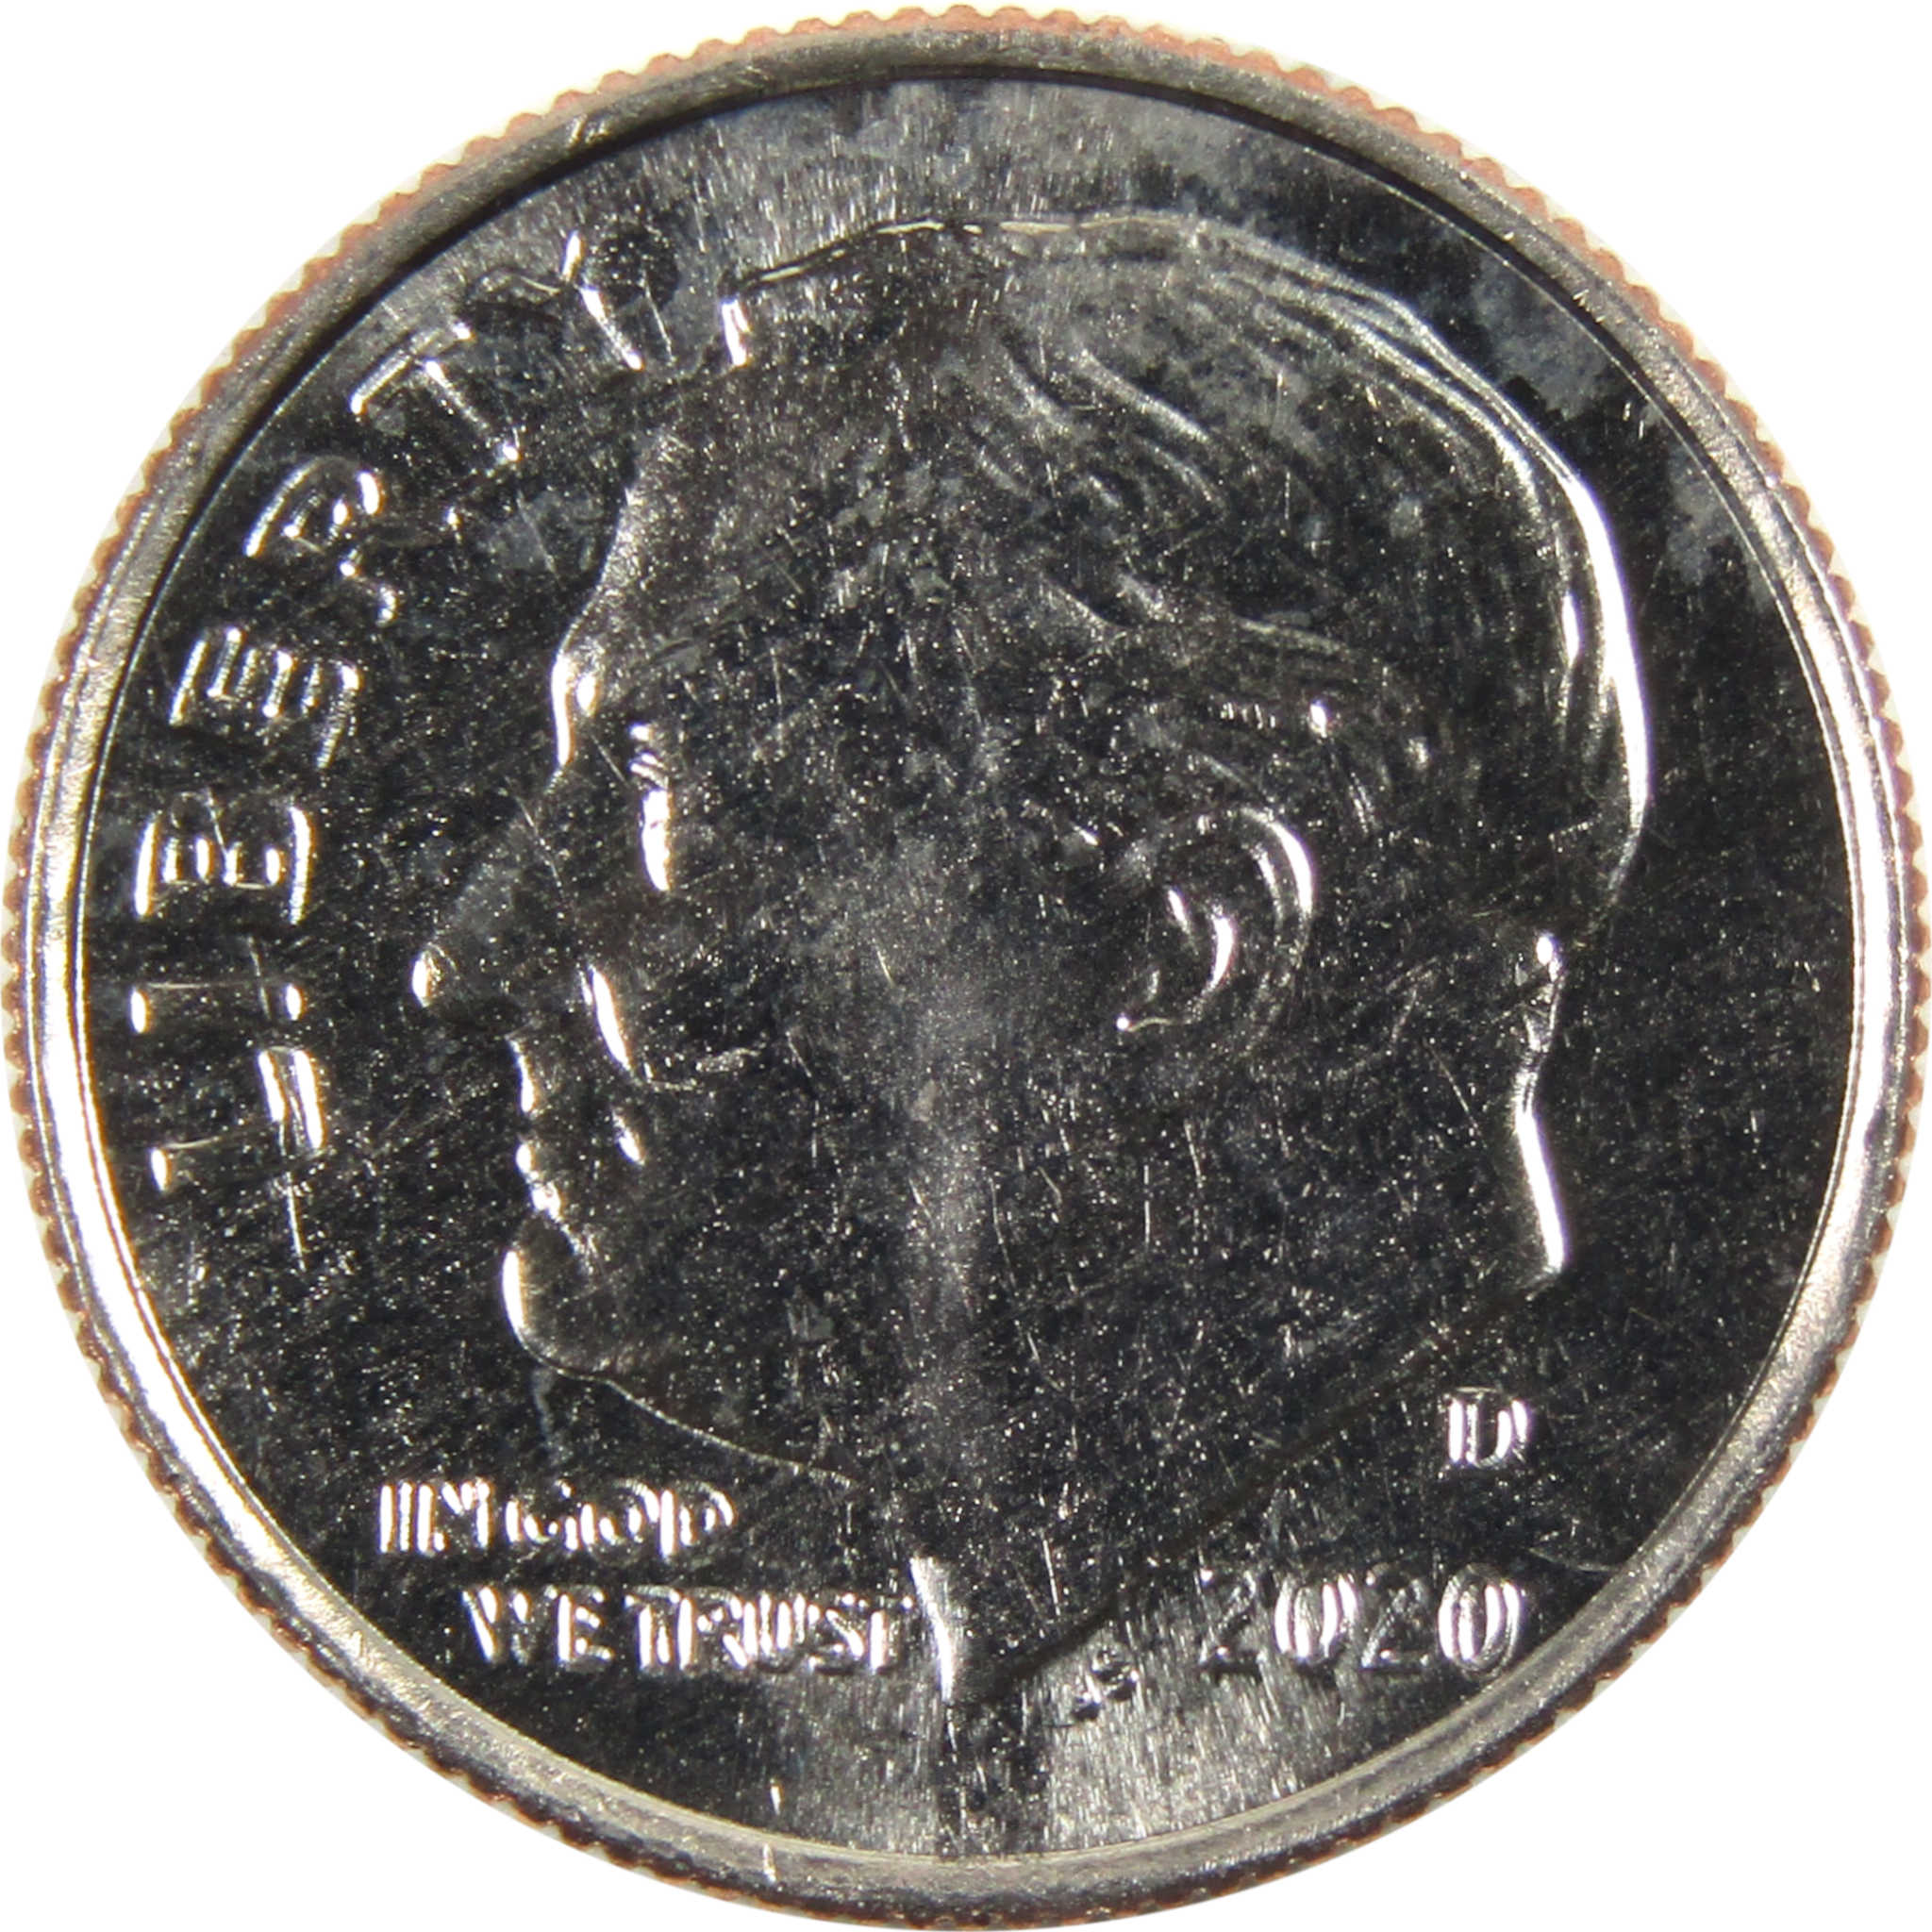 2020 D Roosevelt Dime BU Uncirculated Clad 10c Coin